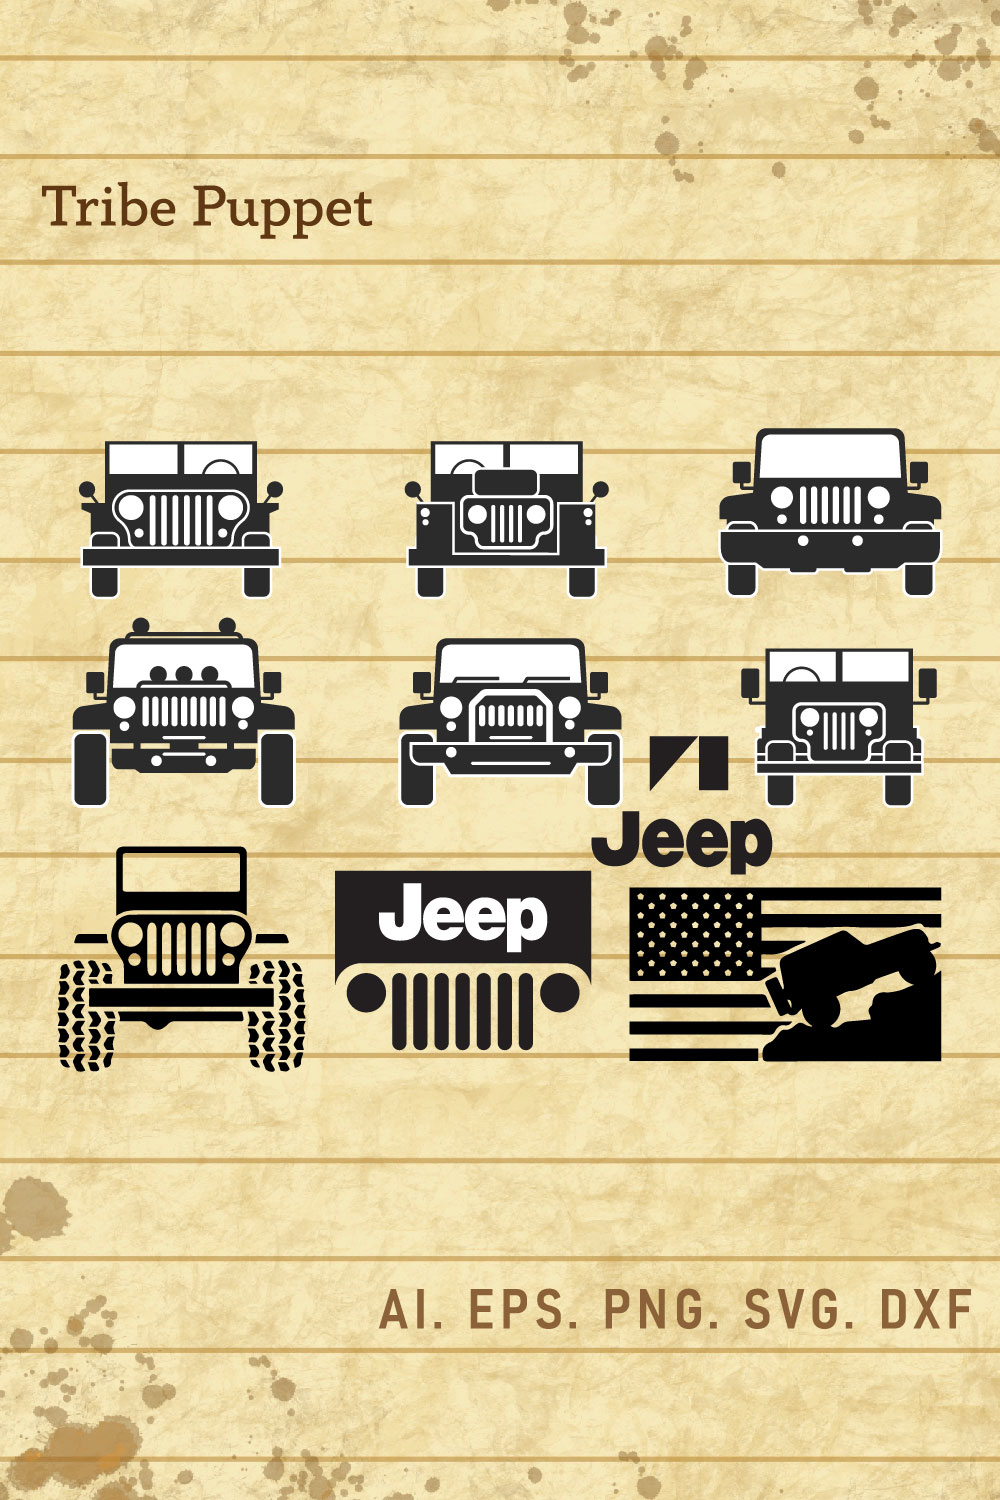 Jeep Car pinterest preview image.